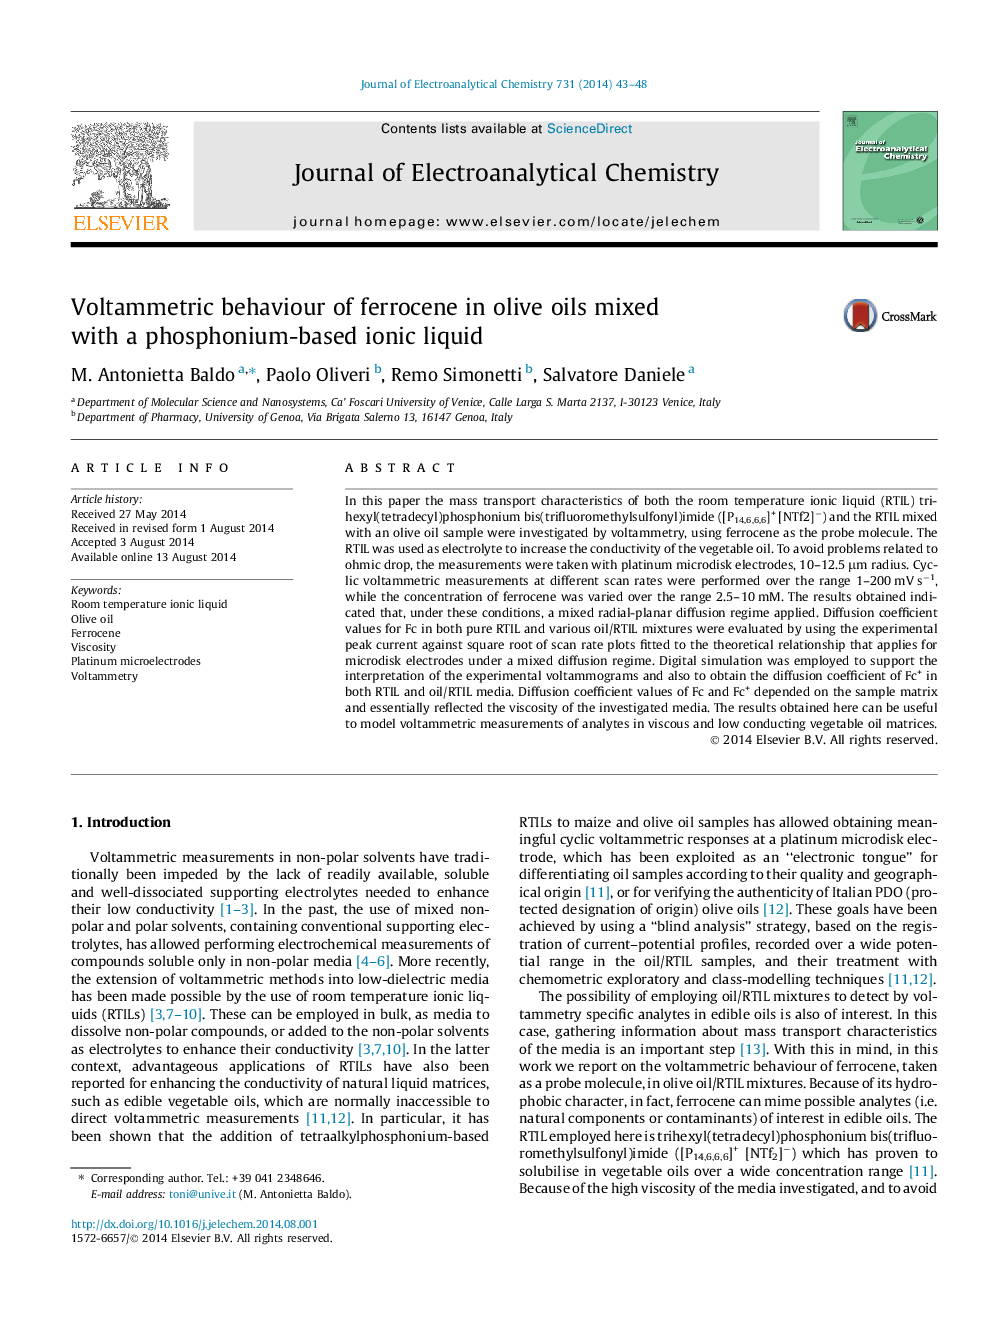 Voltammetric behaviour of ferrocene in olive oils mixed with a phosphonium-based ionic liquid